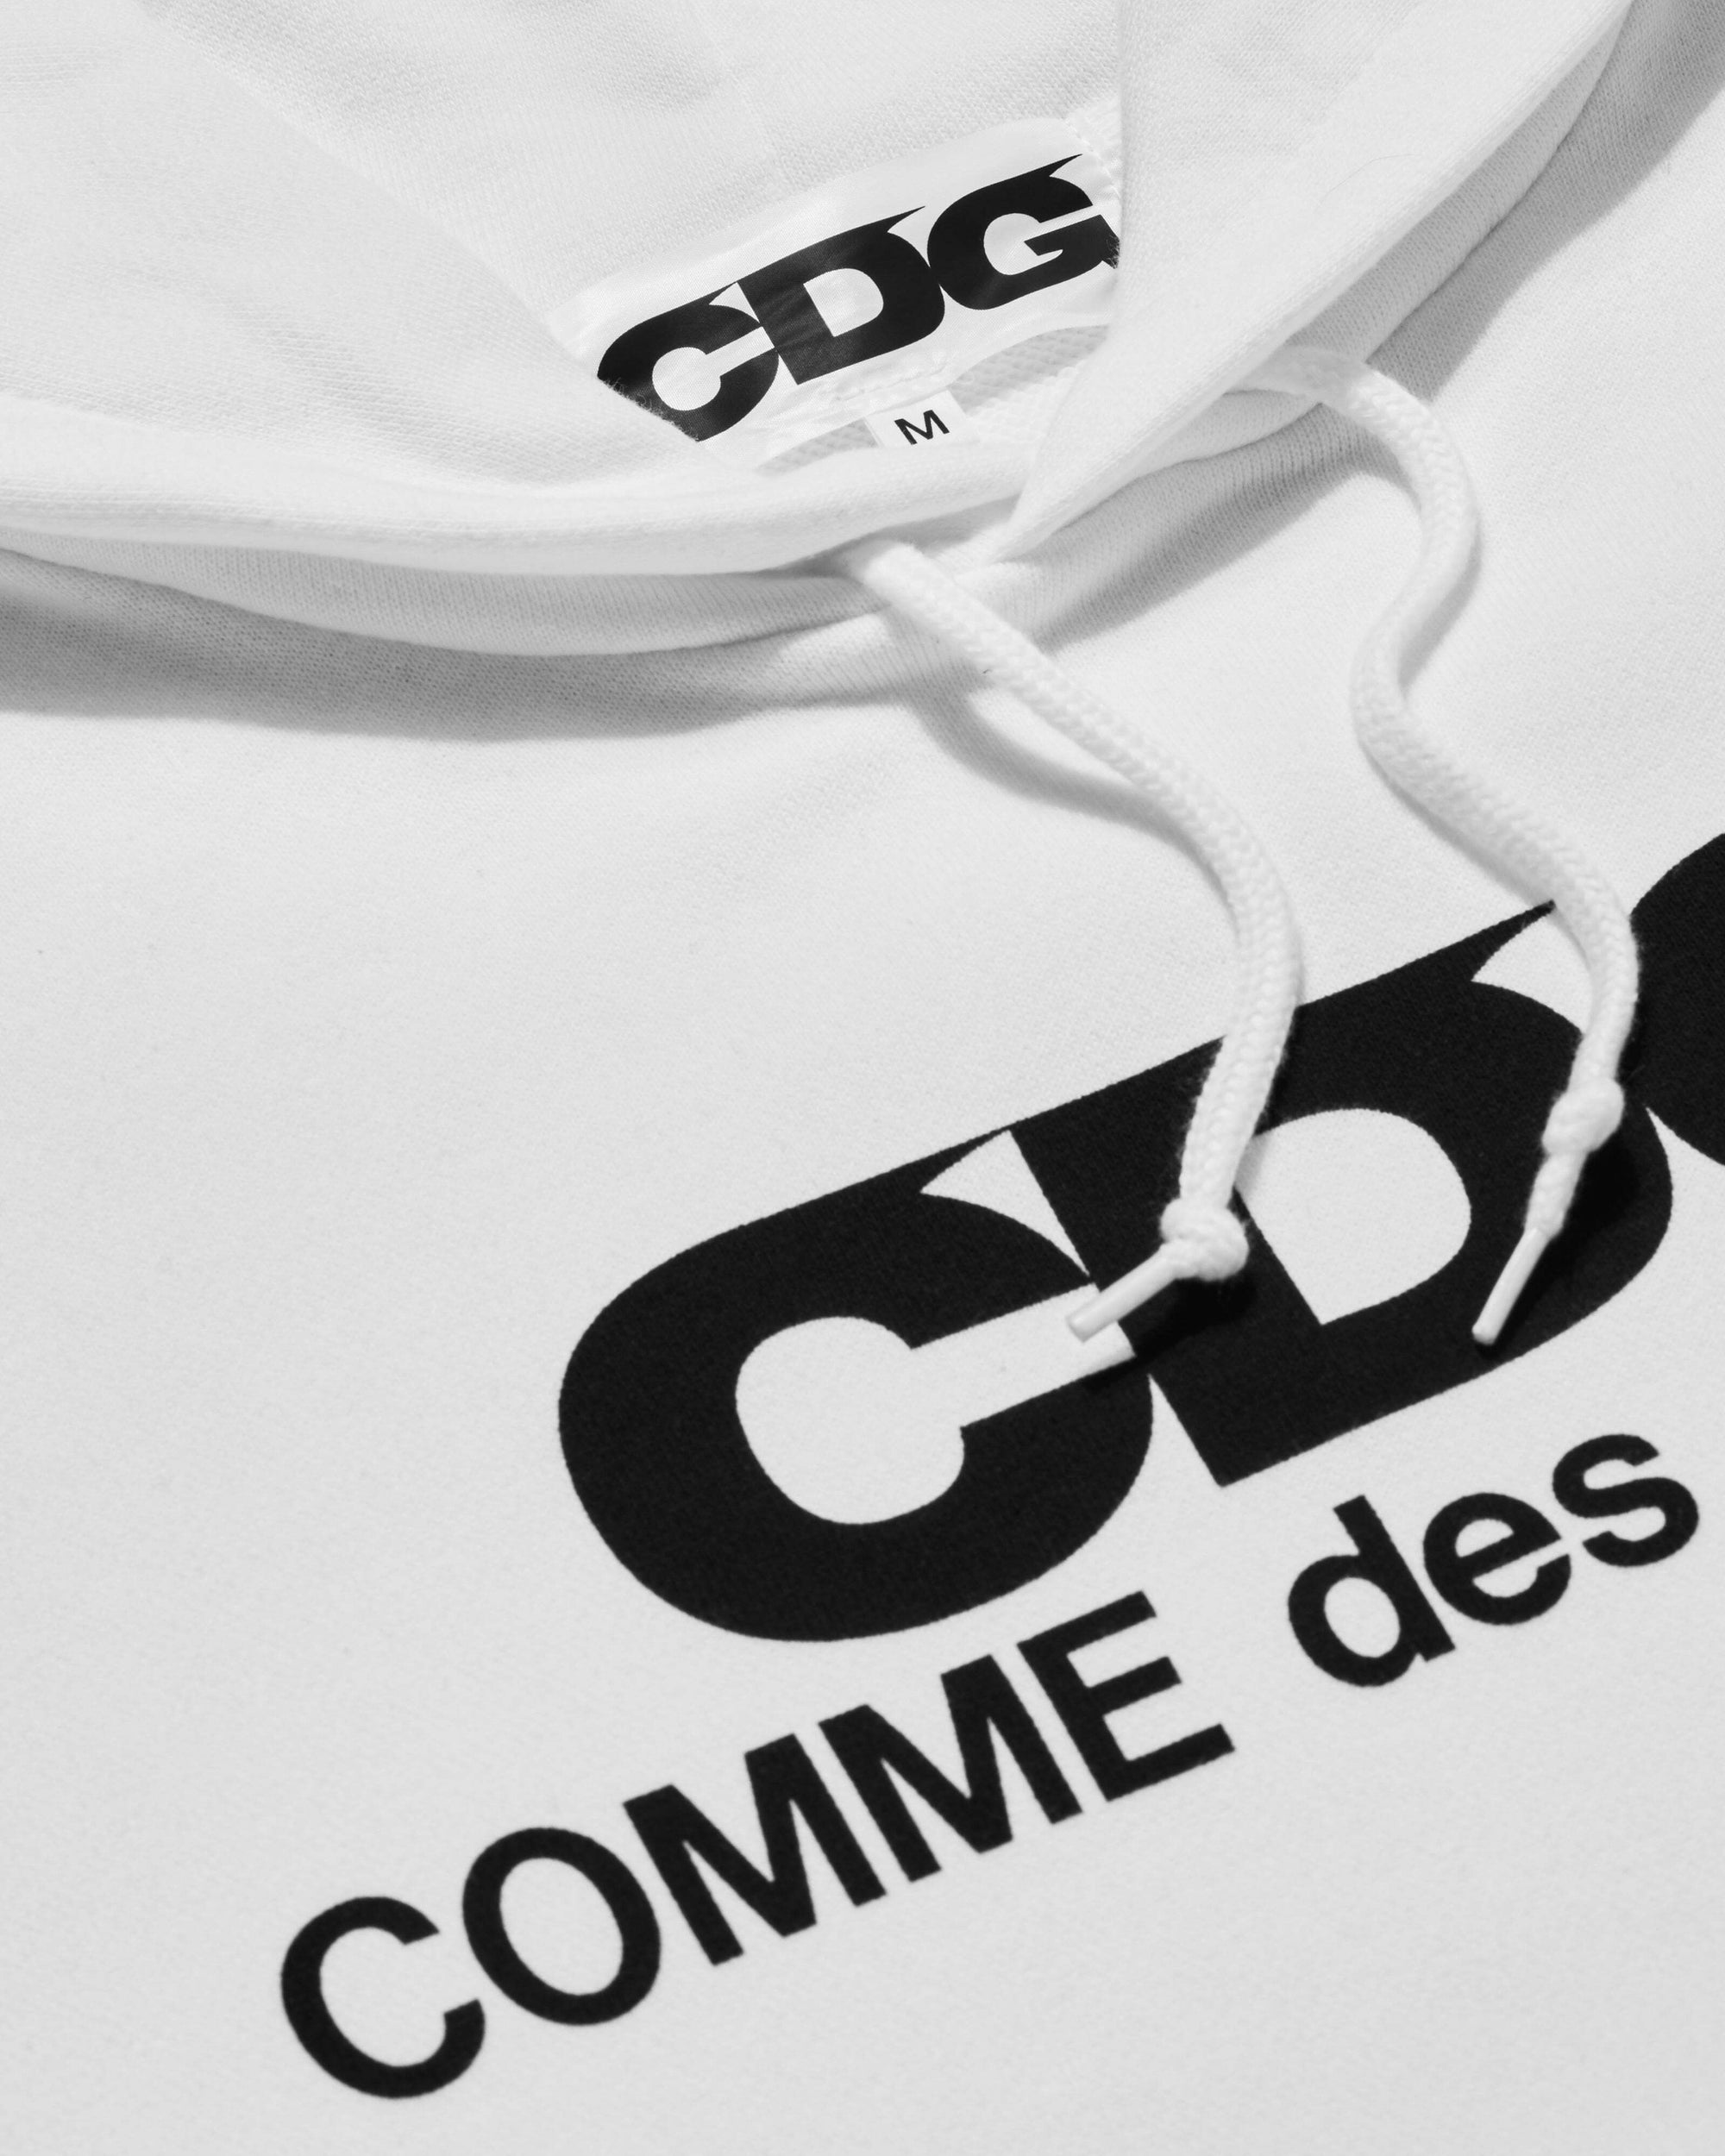 CDG - Logo Hooded Sweatshirt - (White) view 3